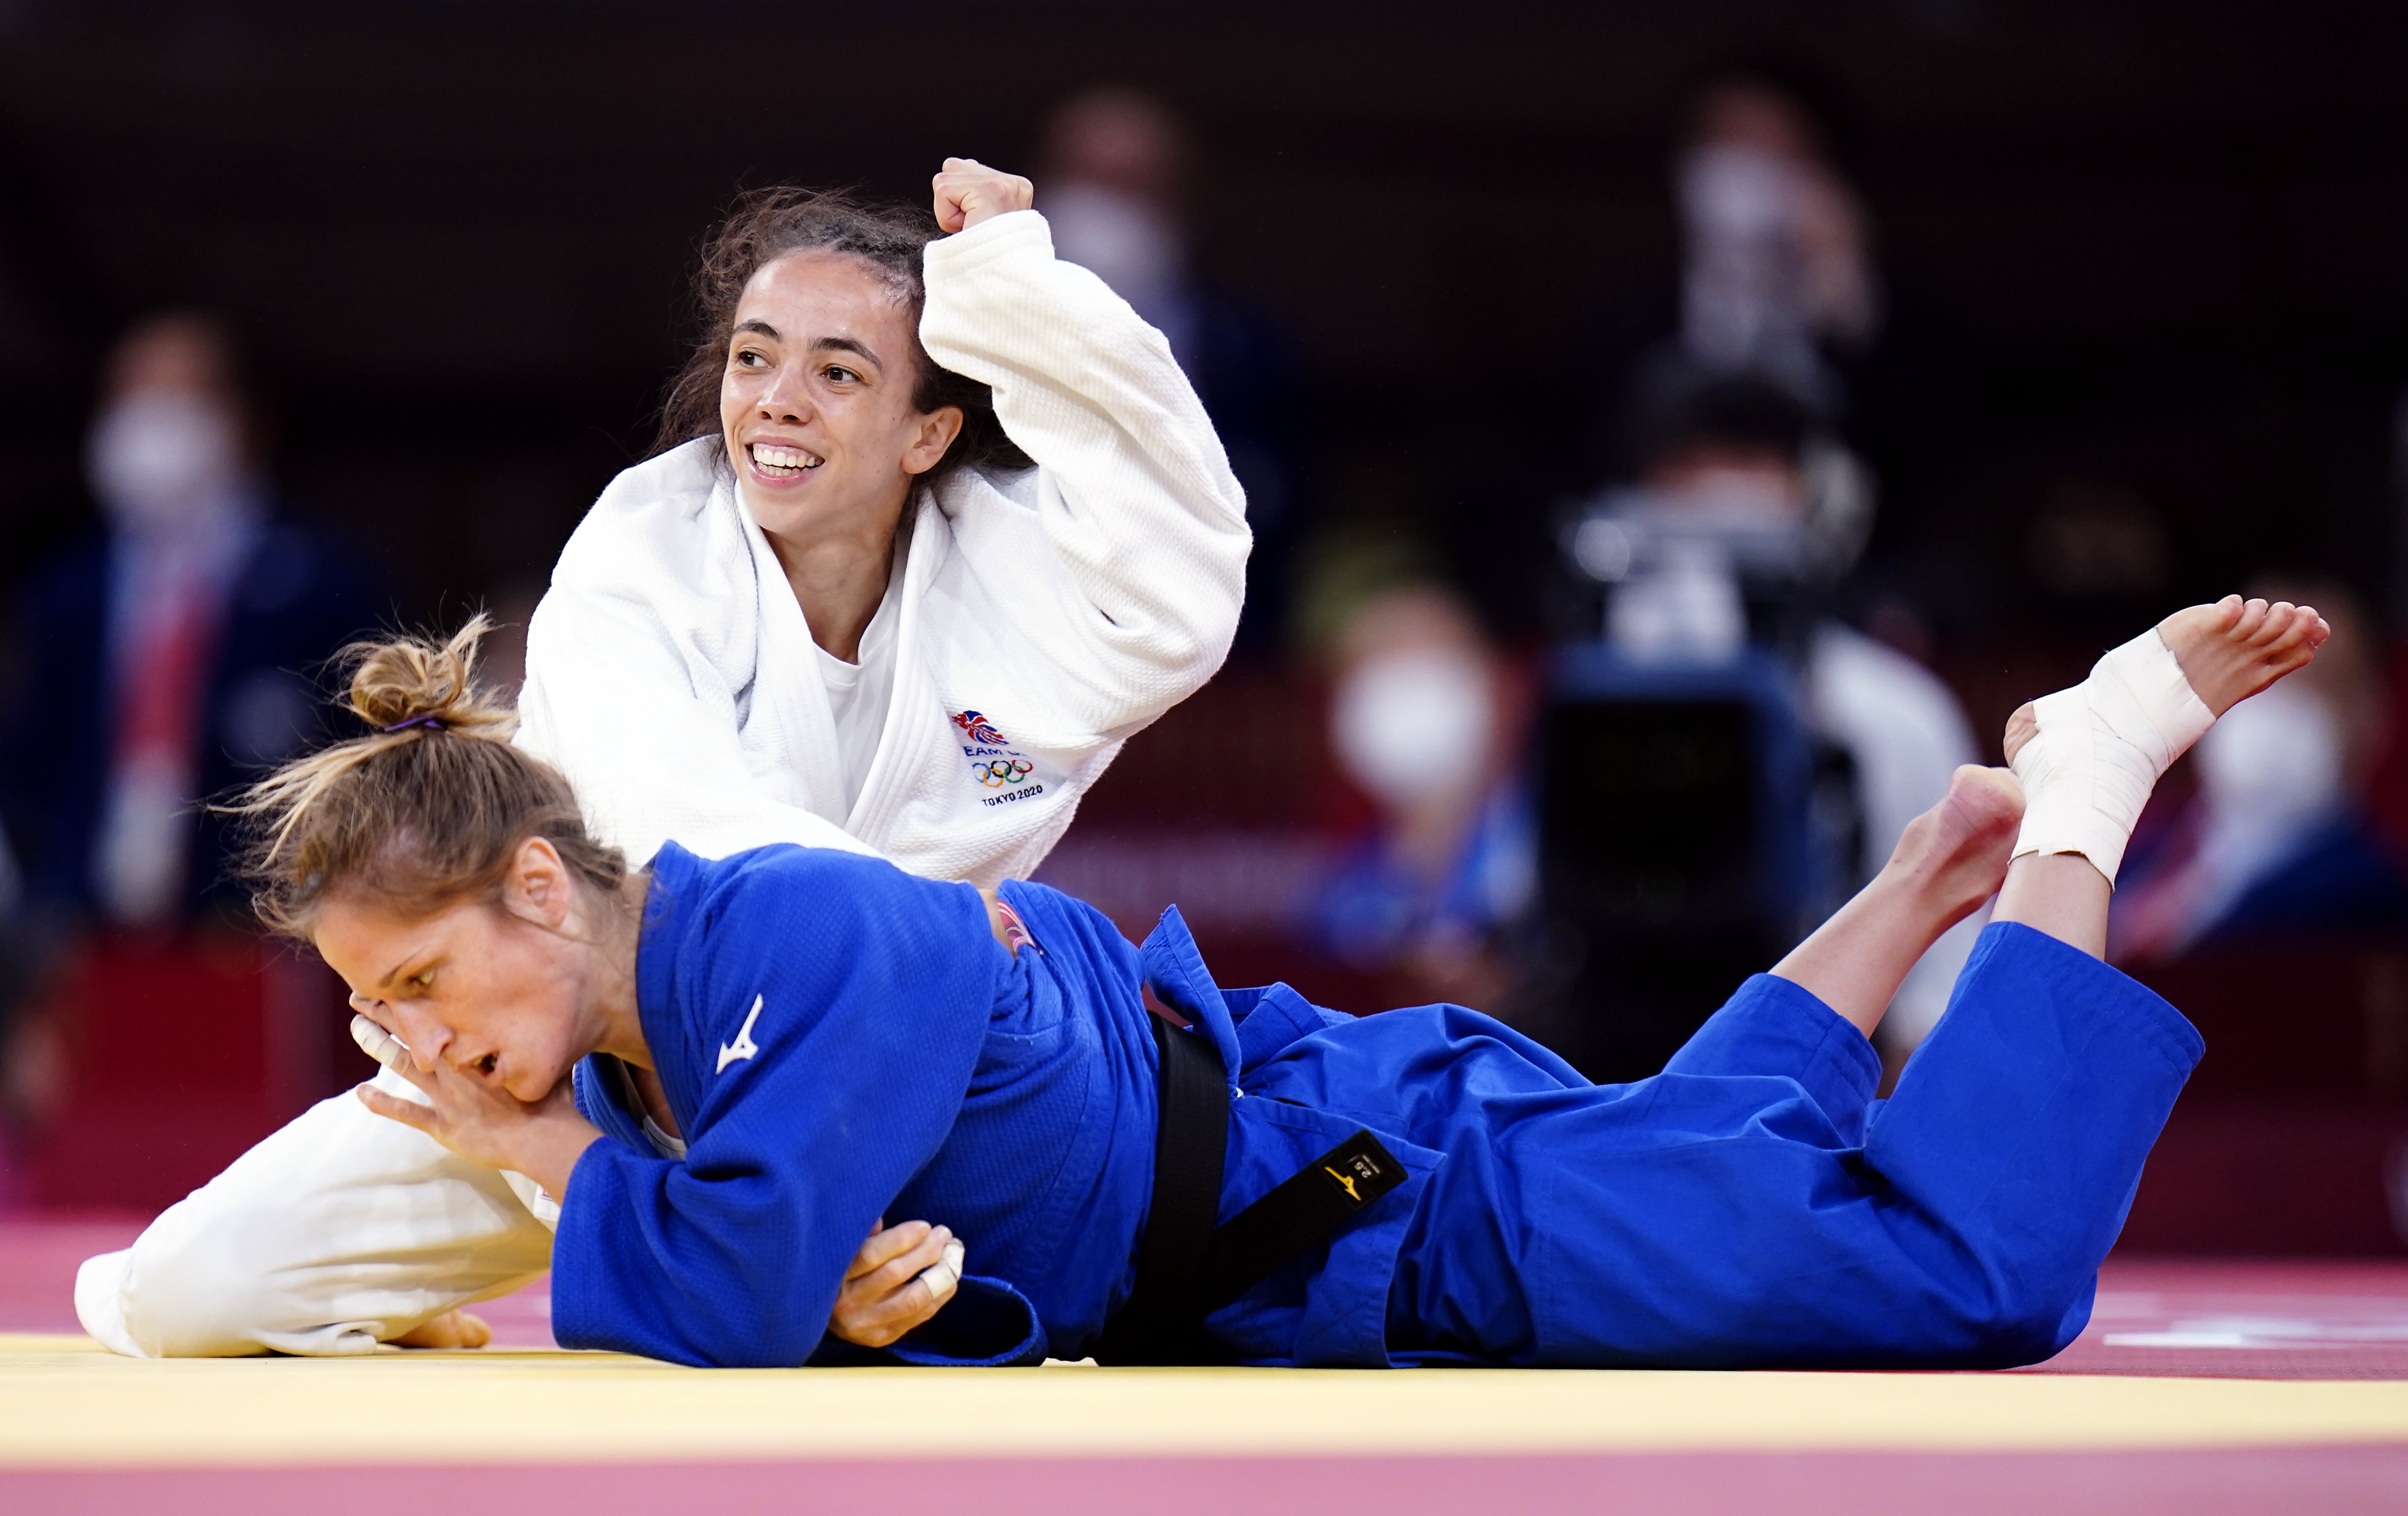 Great Britain judoka Chelsie Giles celebrates victory over Switzerland’s Fabienne Kocher in her bronze medal match (Danny Lawson/PA)